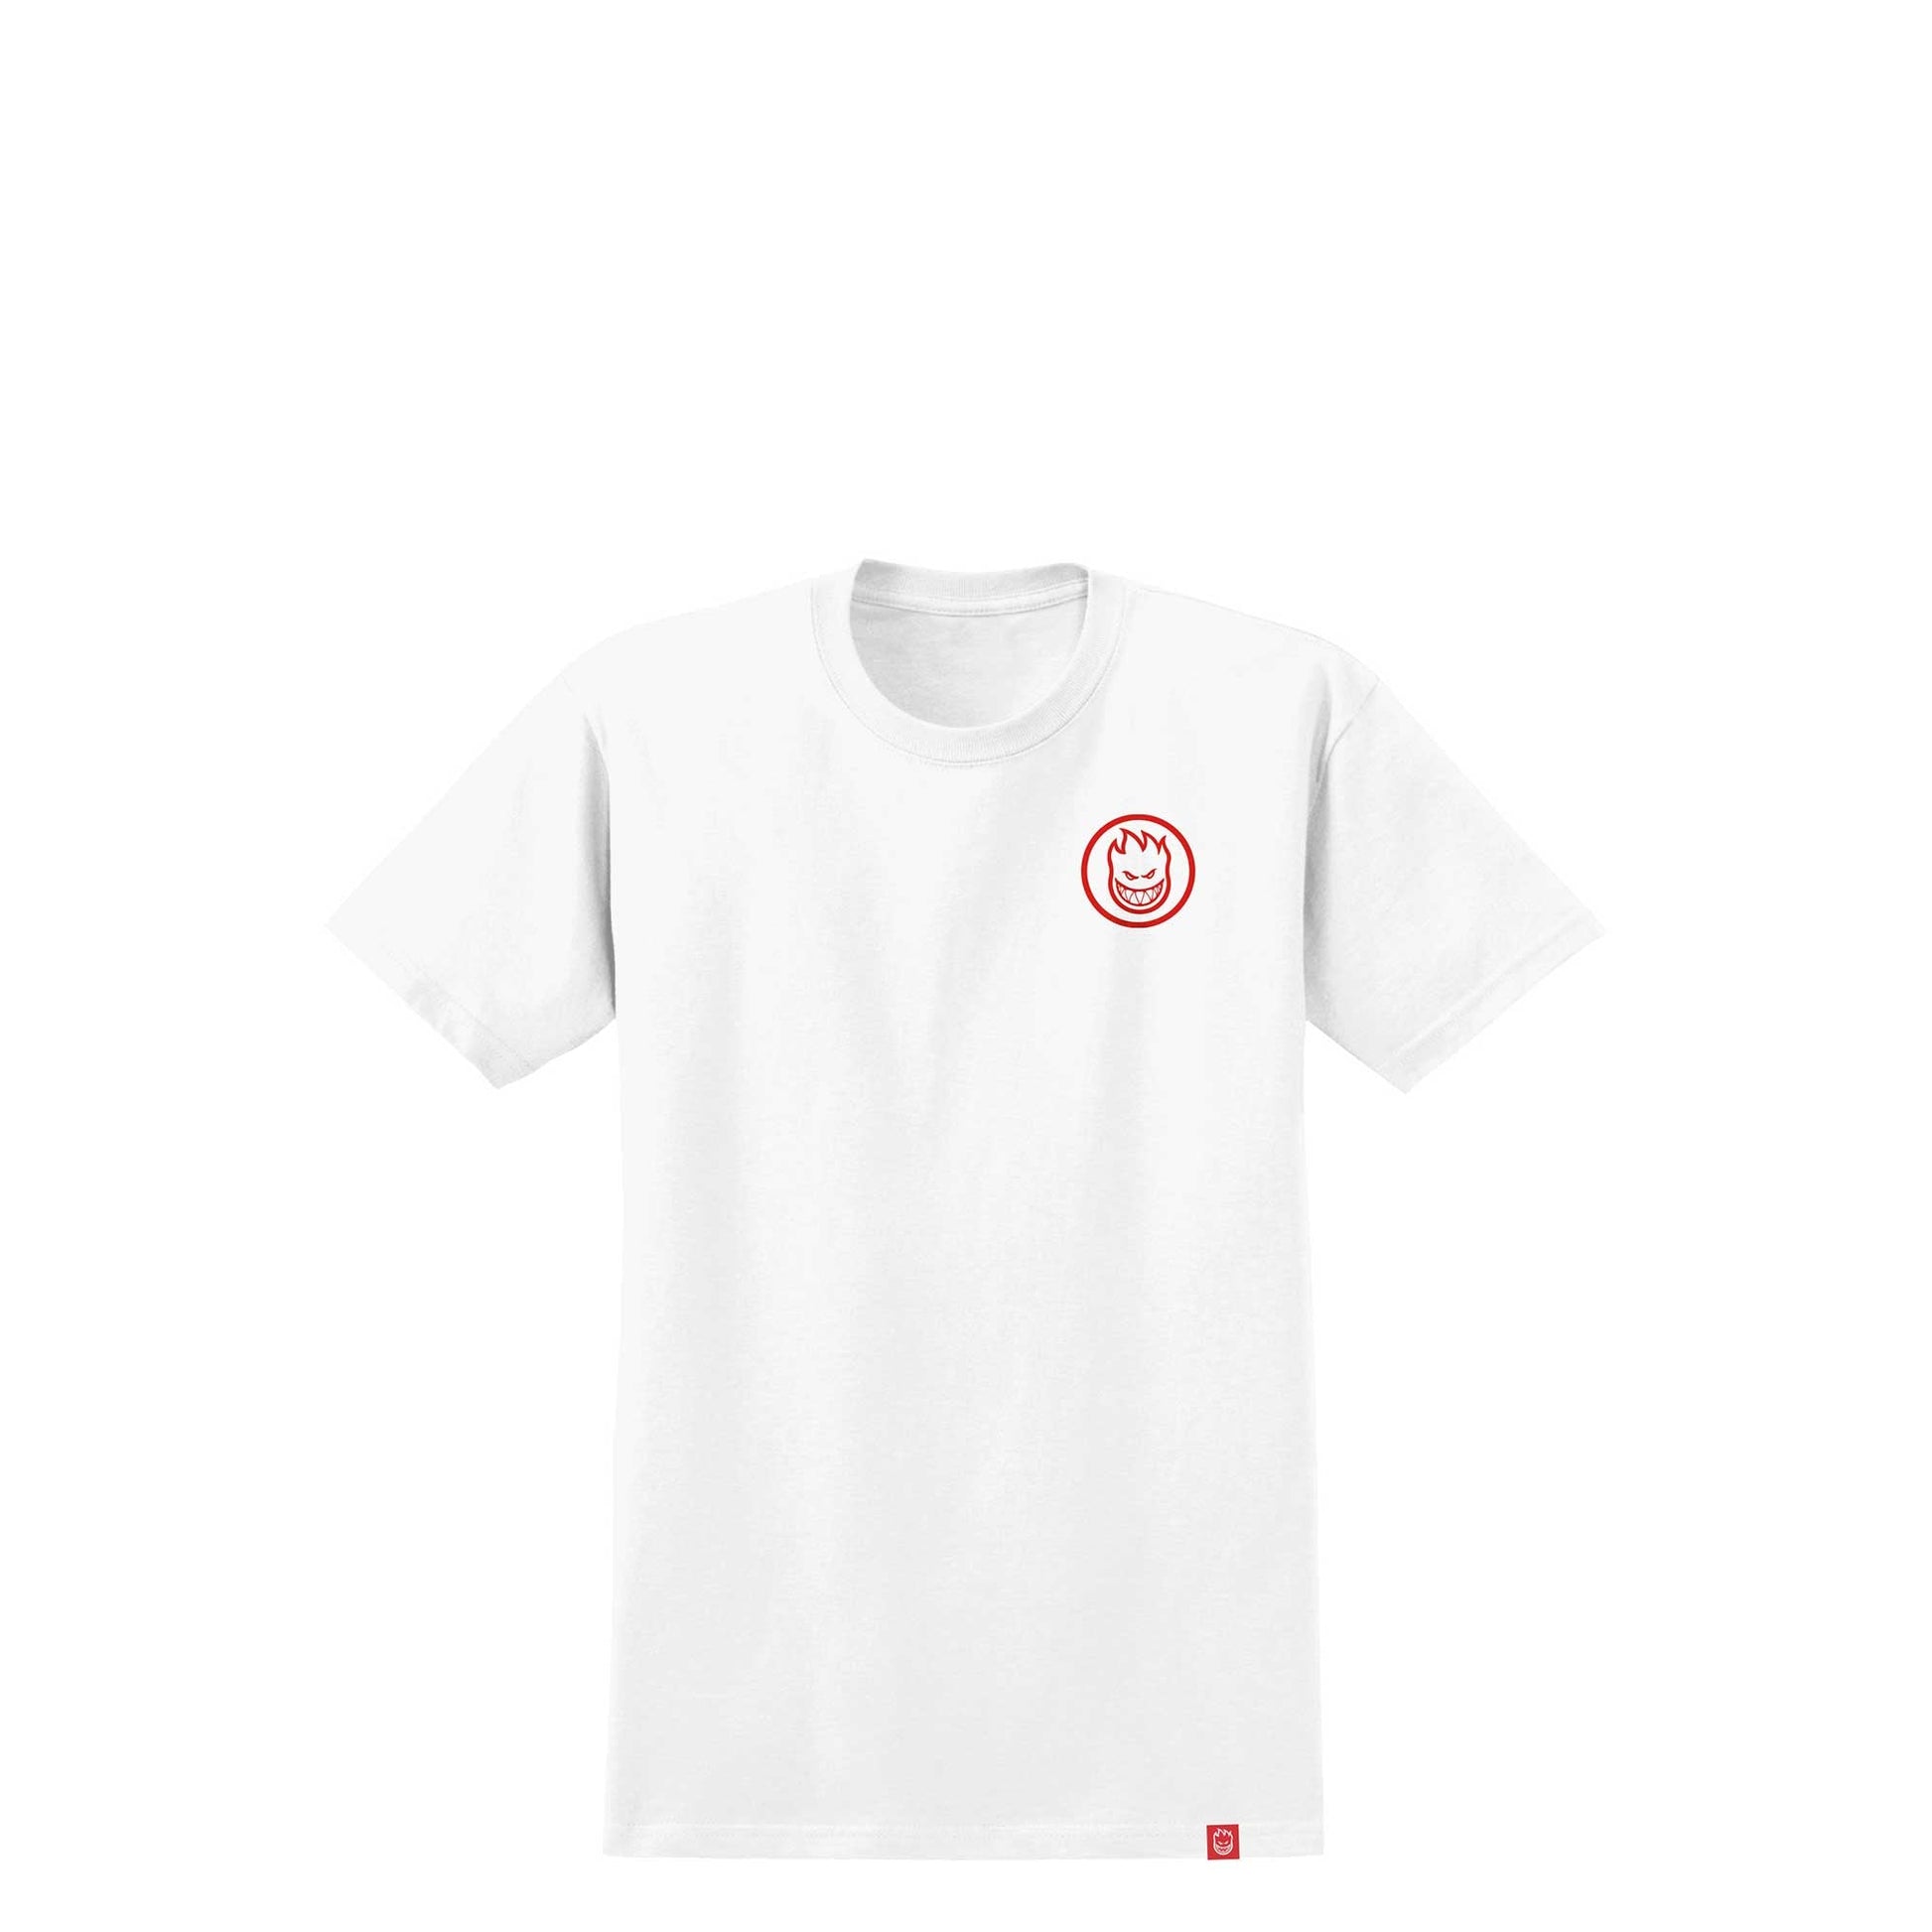 Spitfire Classic Swirl S/S T-Shirt, white w/ red prints - Tiki Room Skateboards - 2